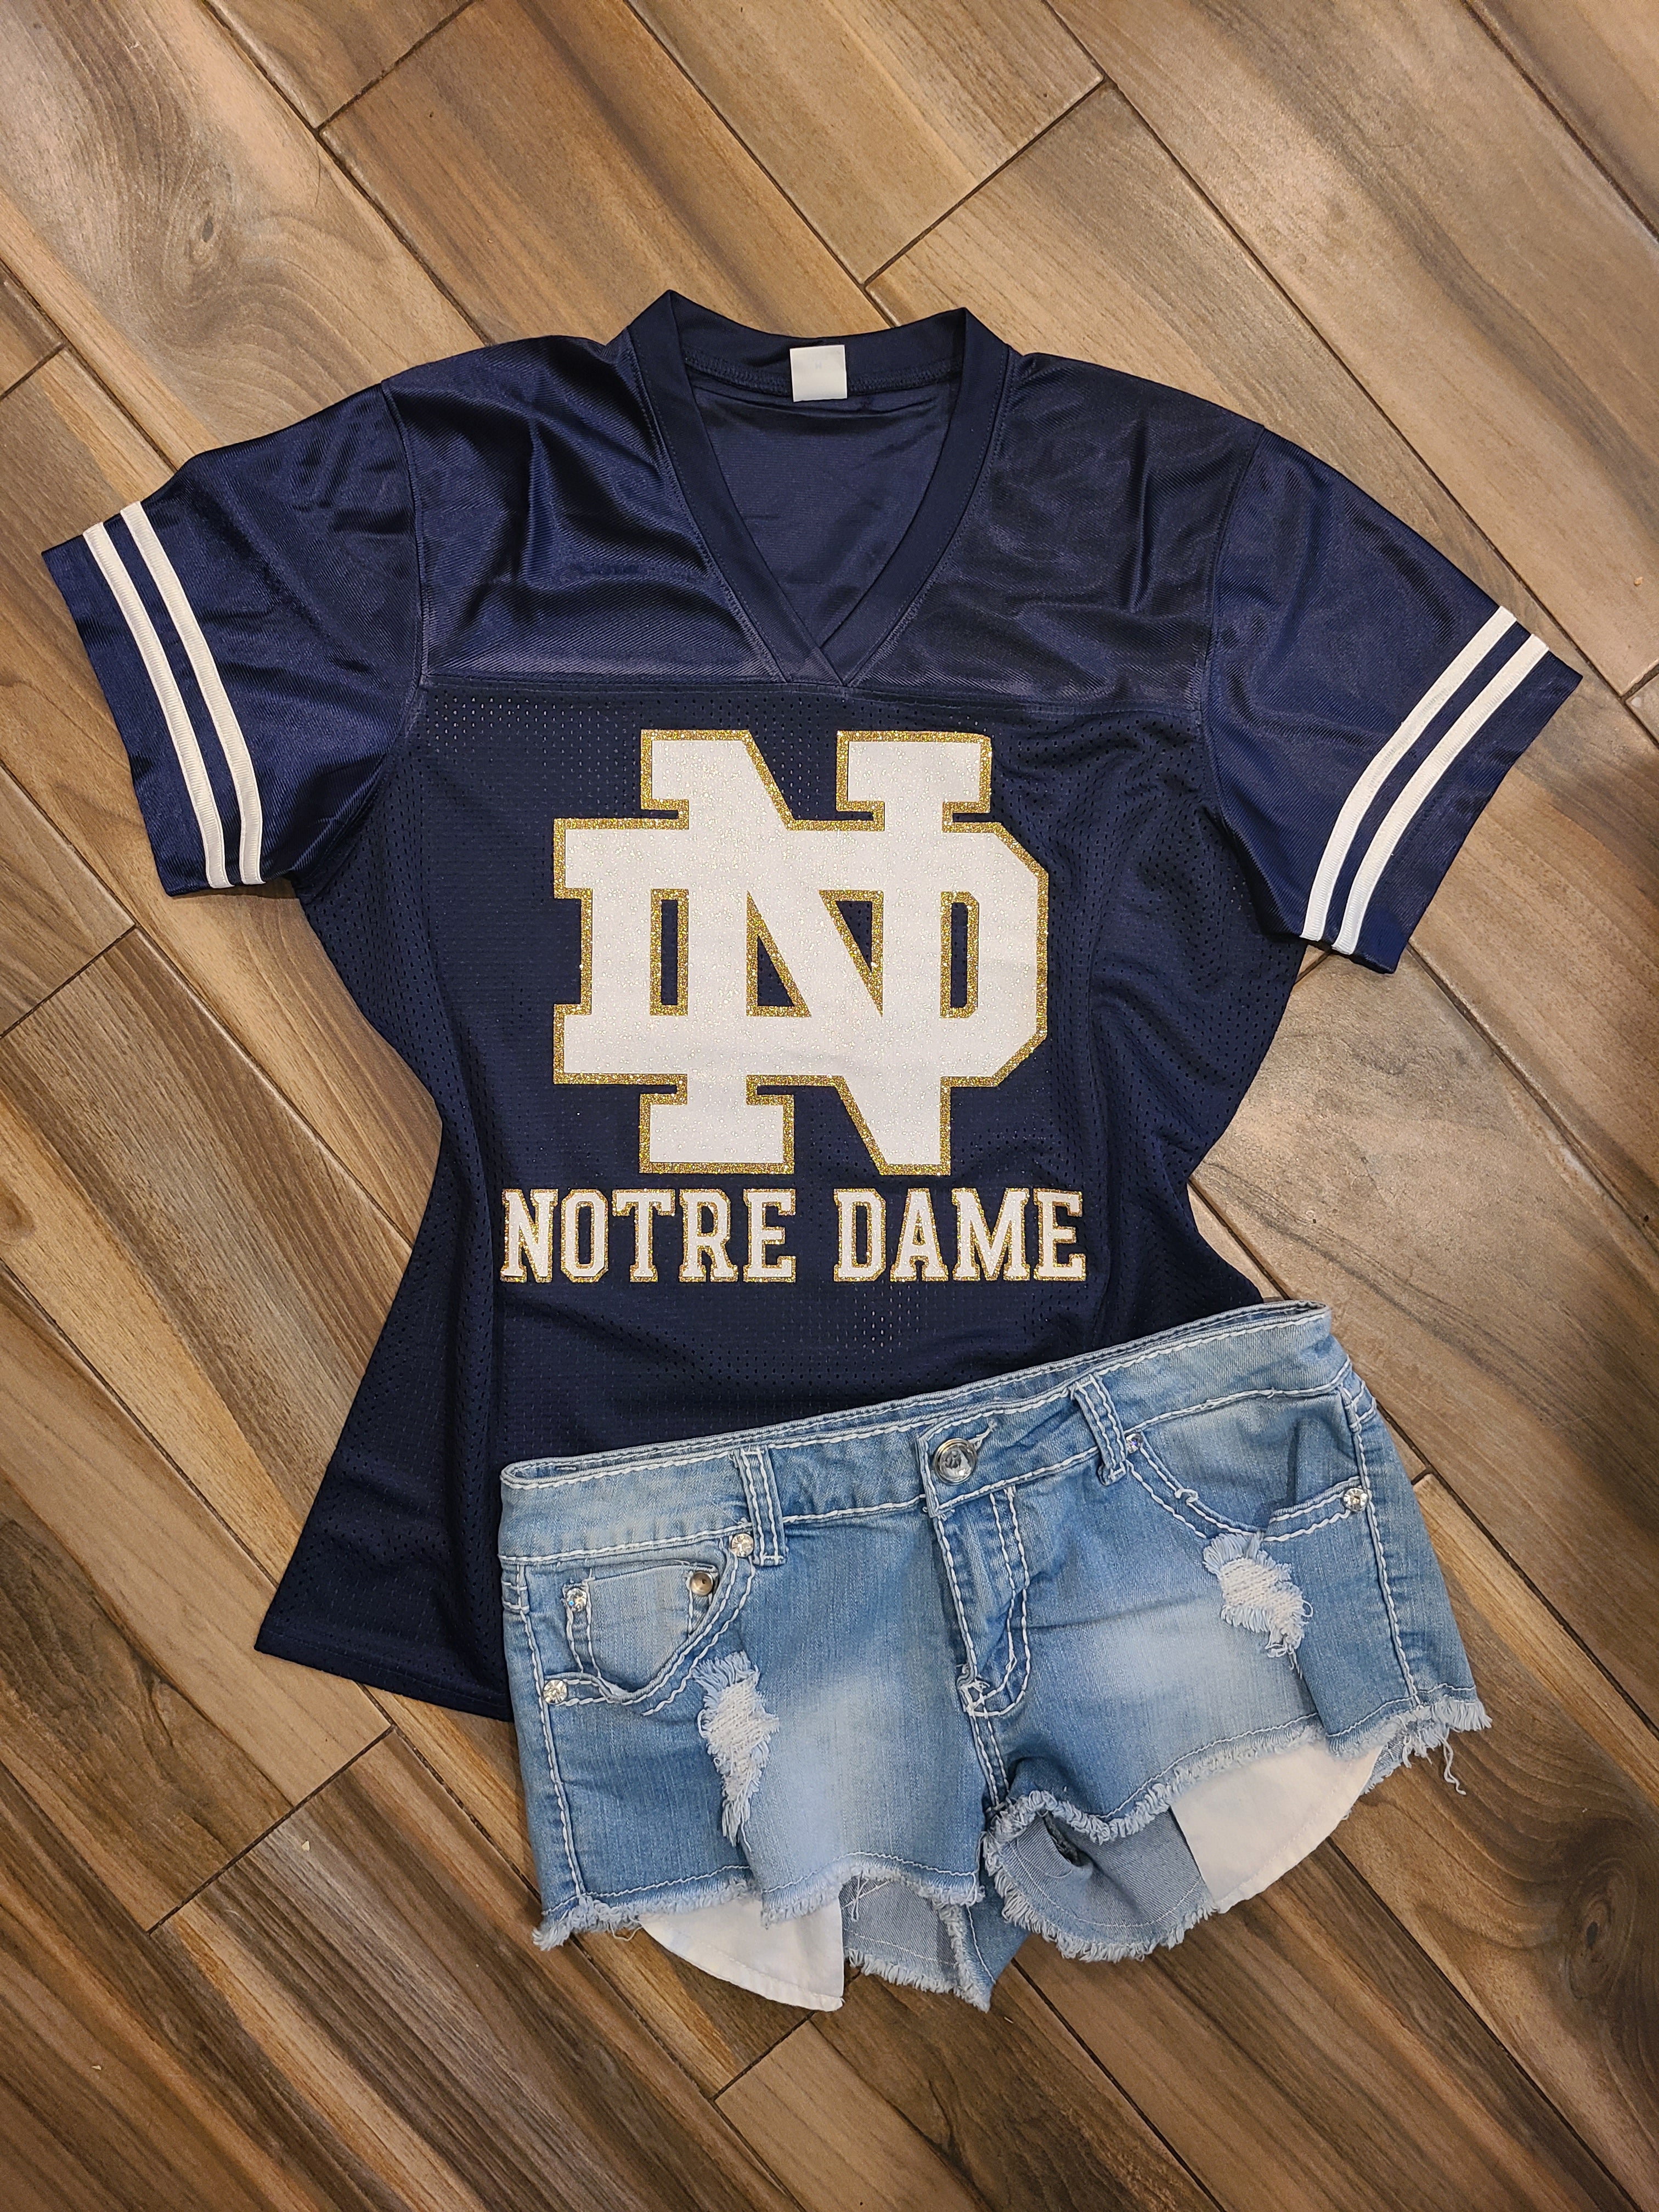 Notre Dame Glitter Top